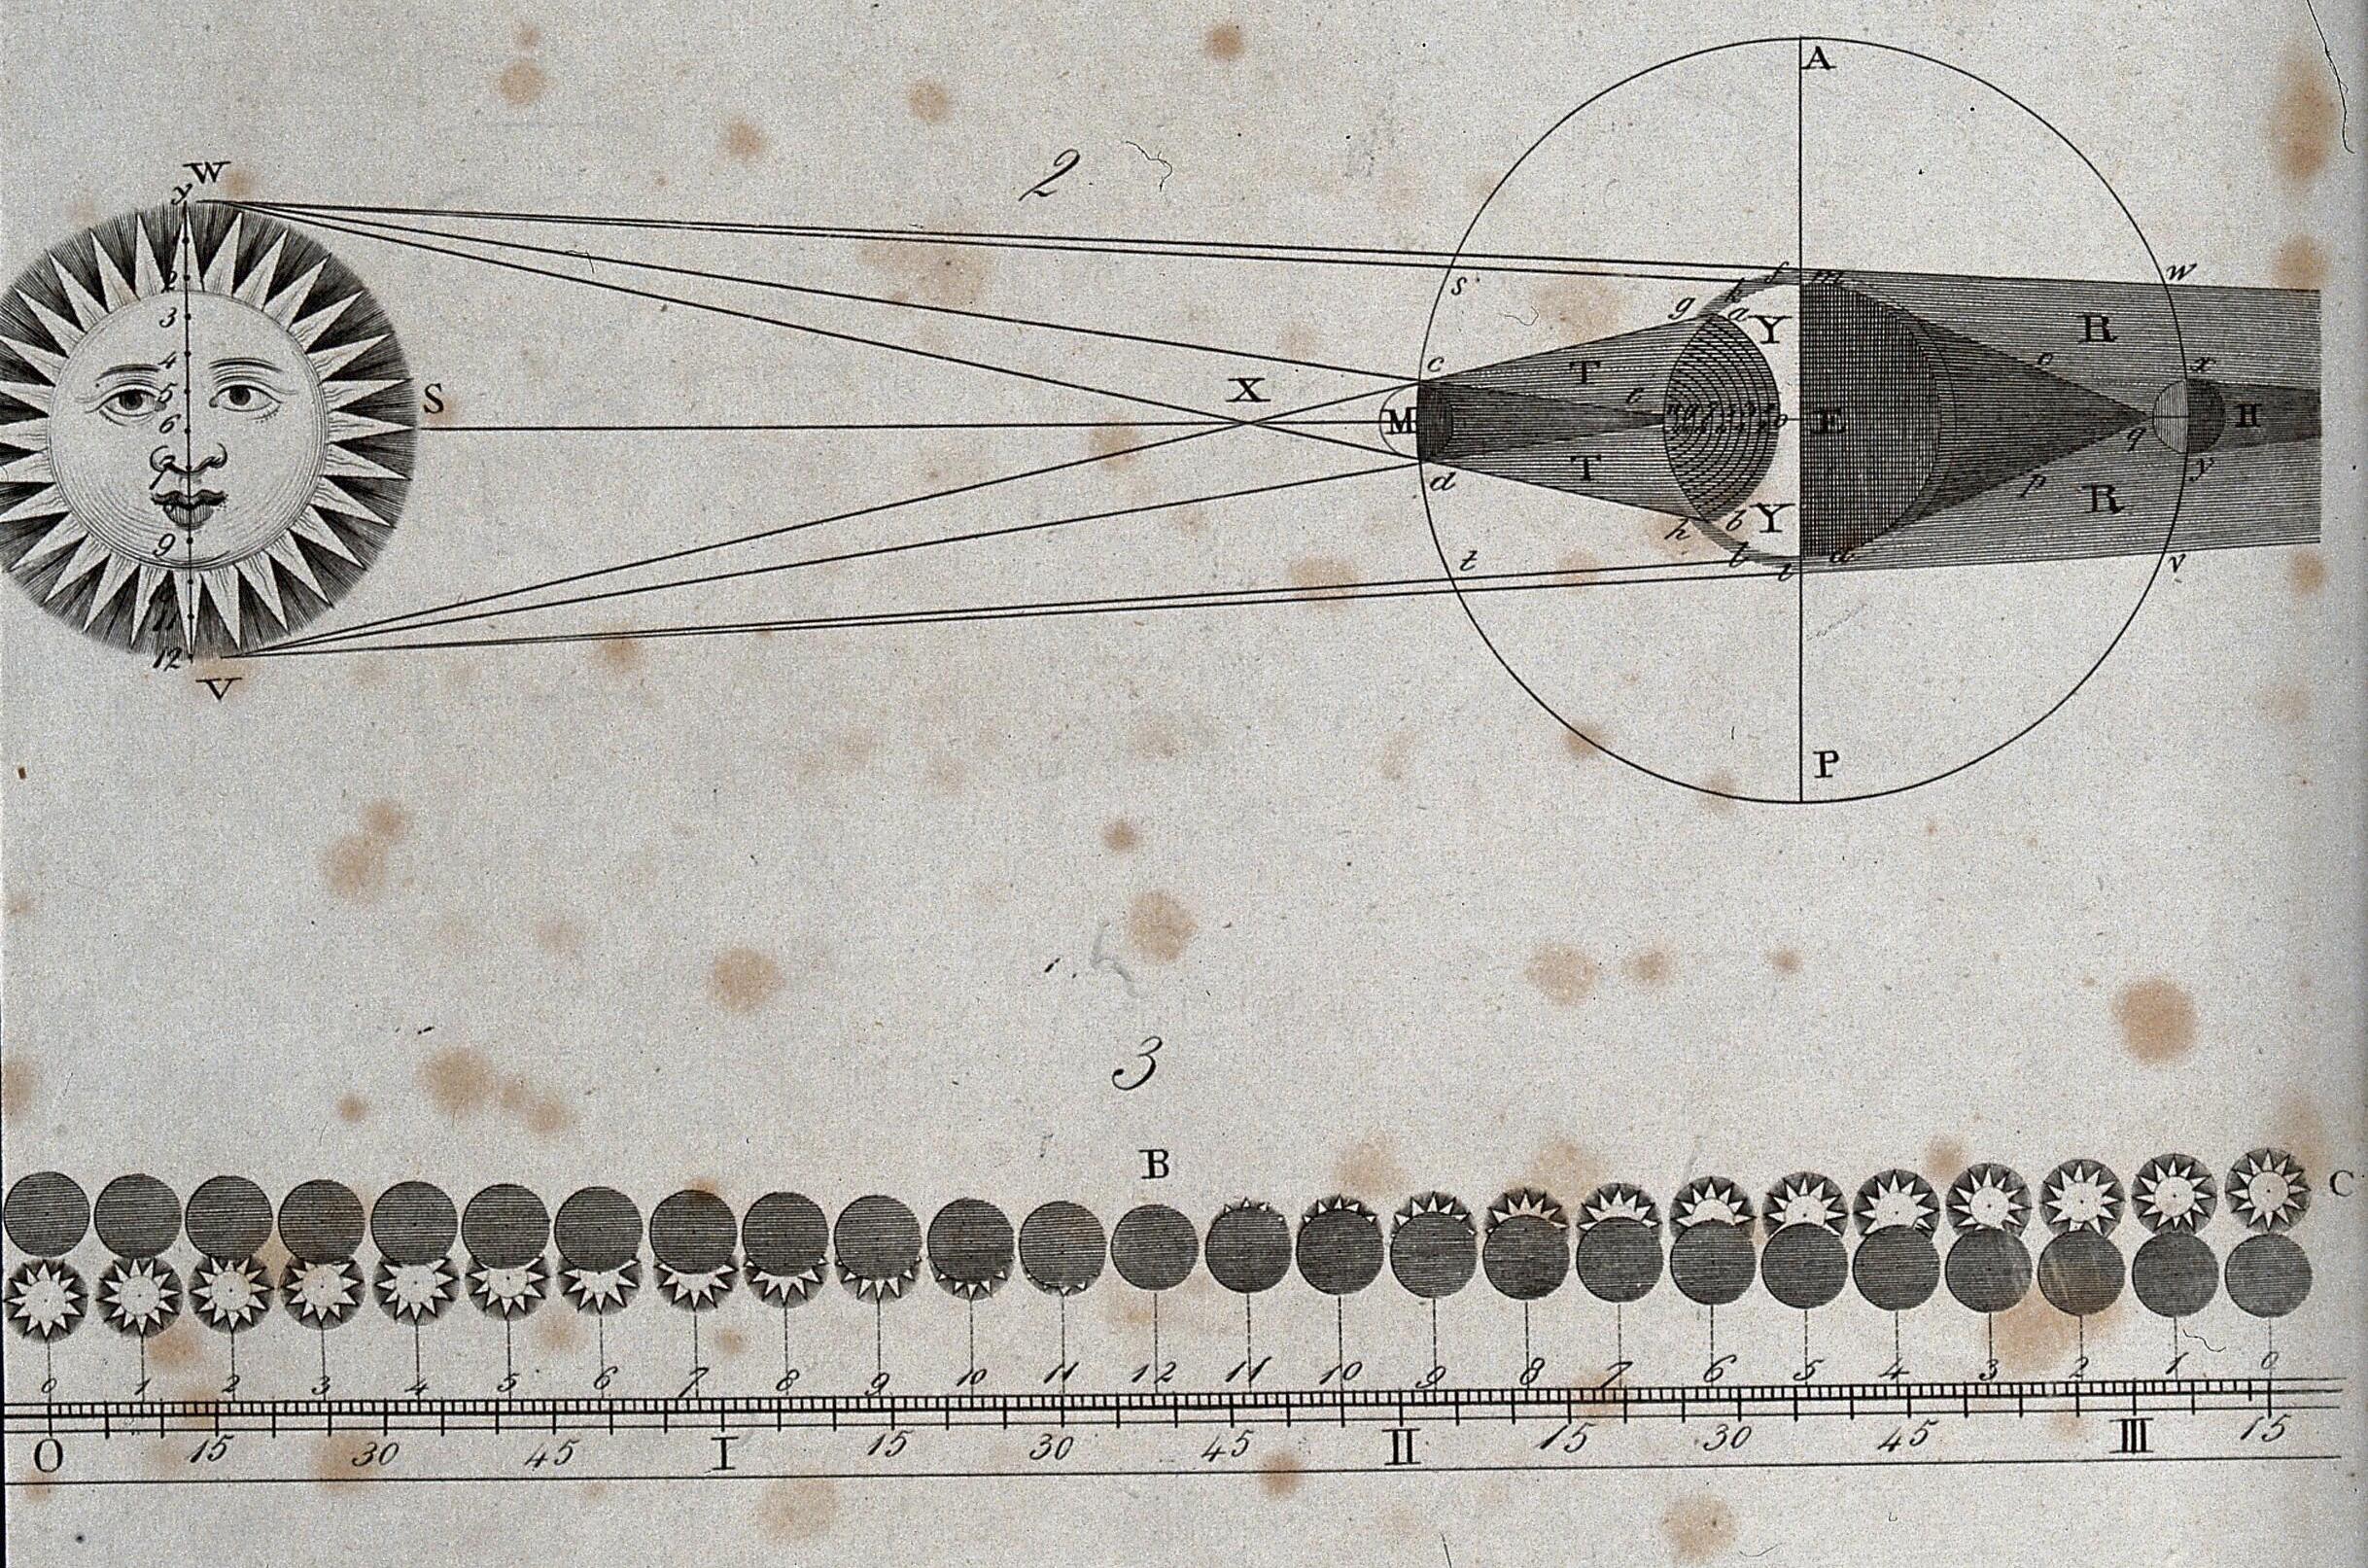 Joseph Lathrop, “A Sermon Containing Reflections on the Solar Eclipse,” 1806